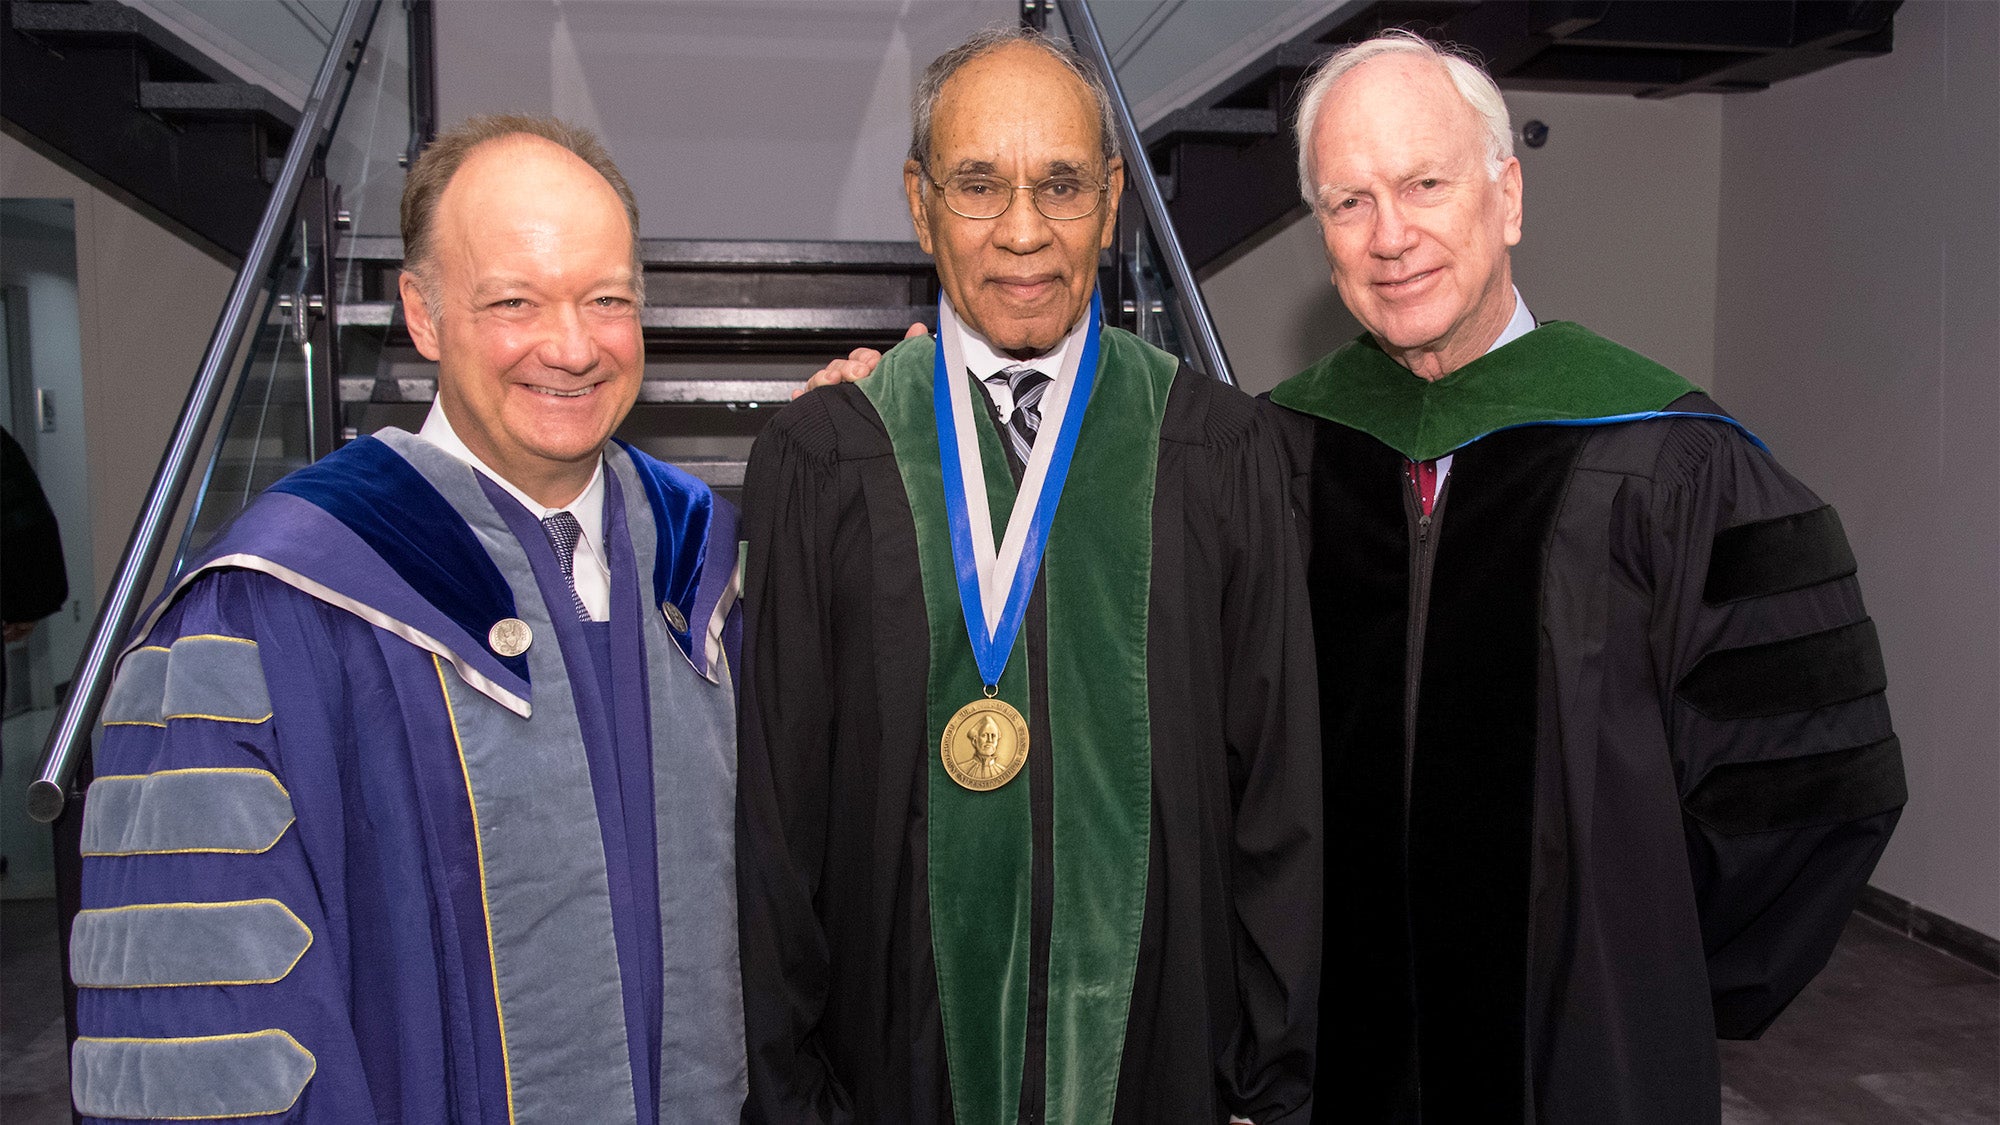 President DeGioia, Harold Freeman and Dr. Healton stand together